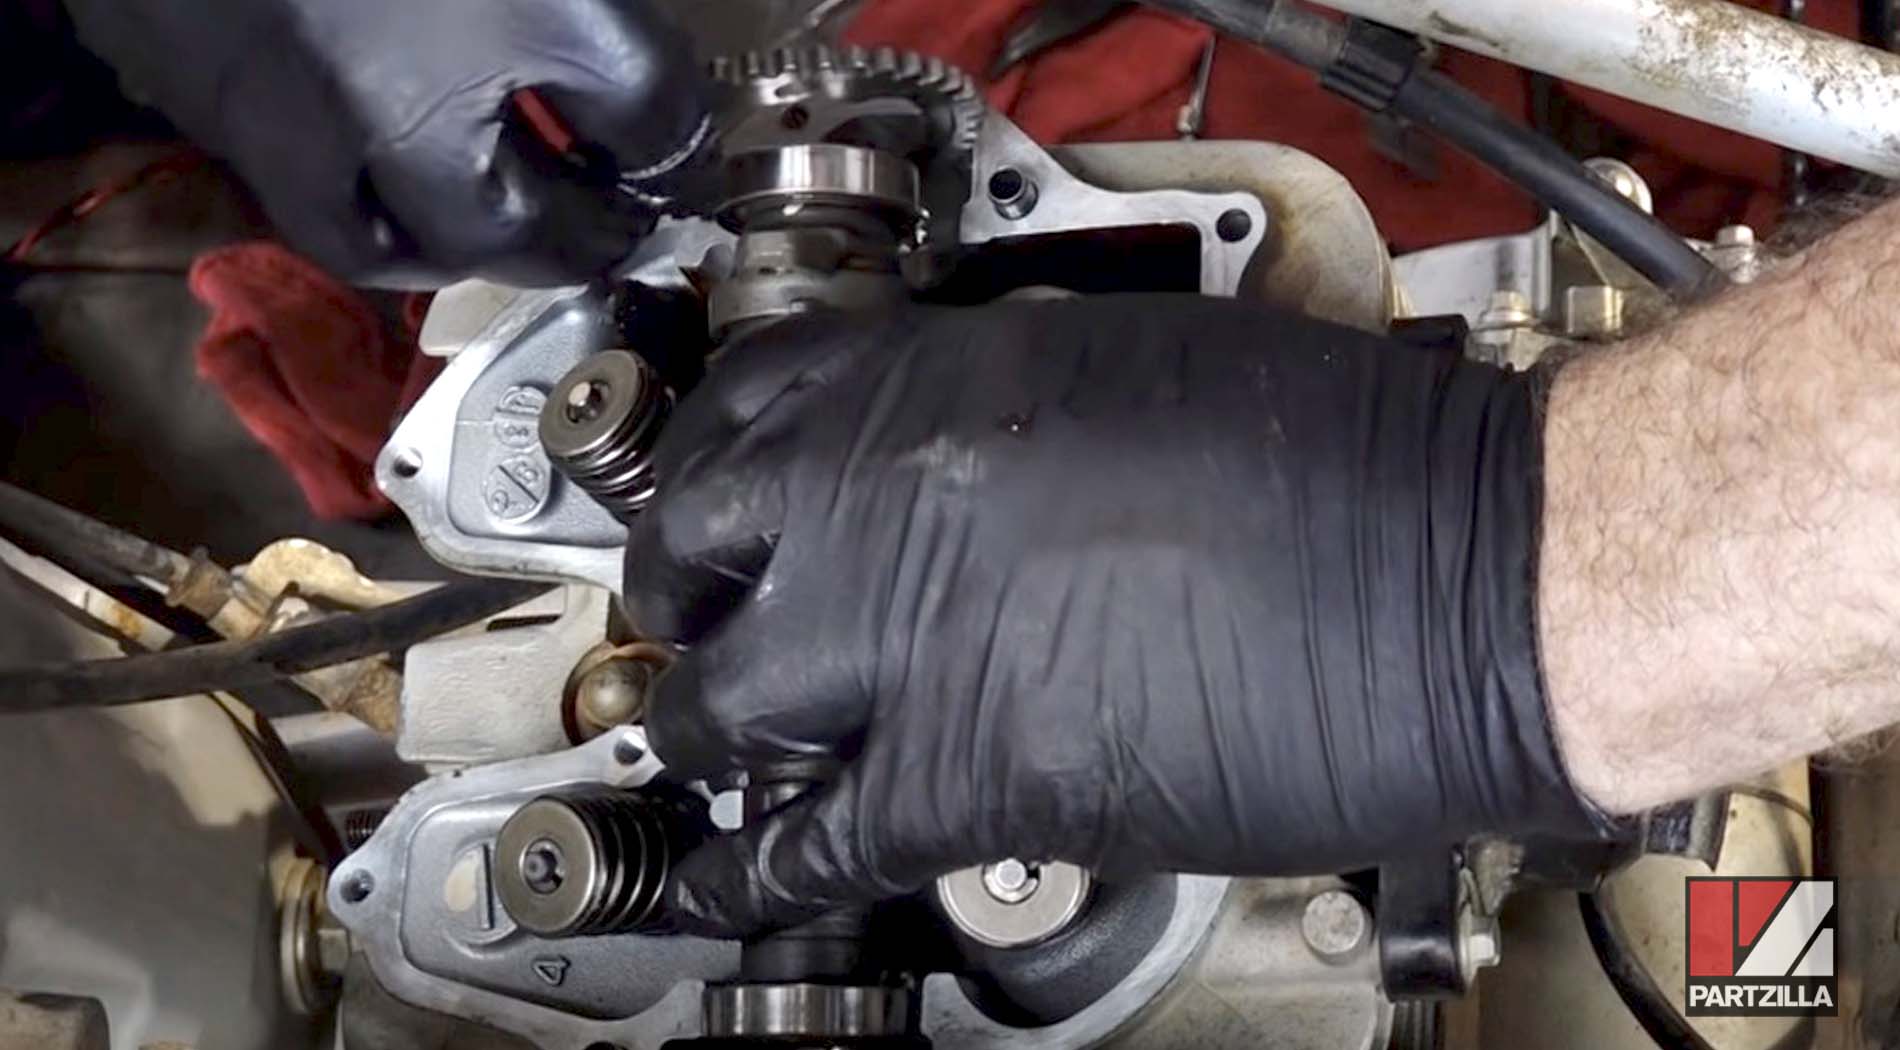 Honda TRX400 engine rebuild camshaft installation